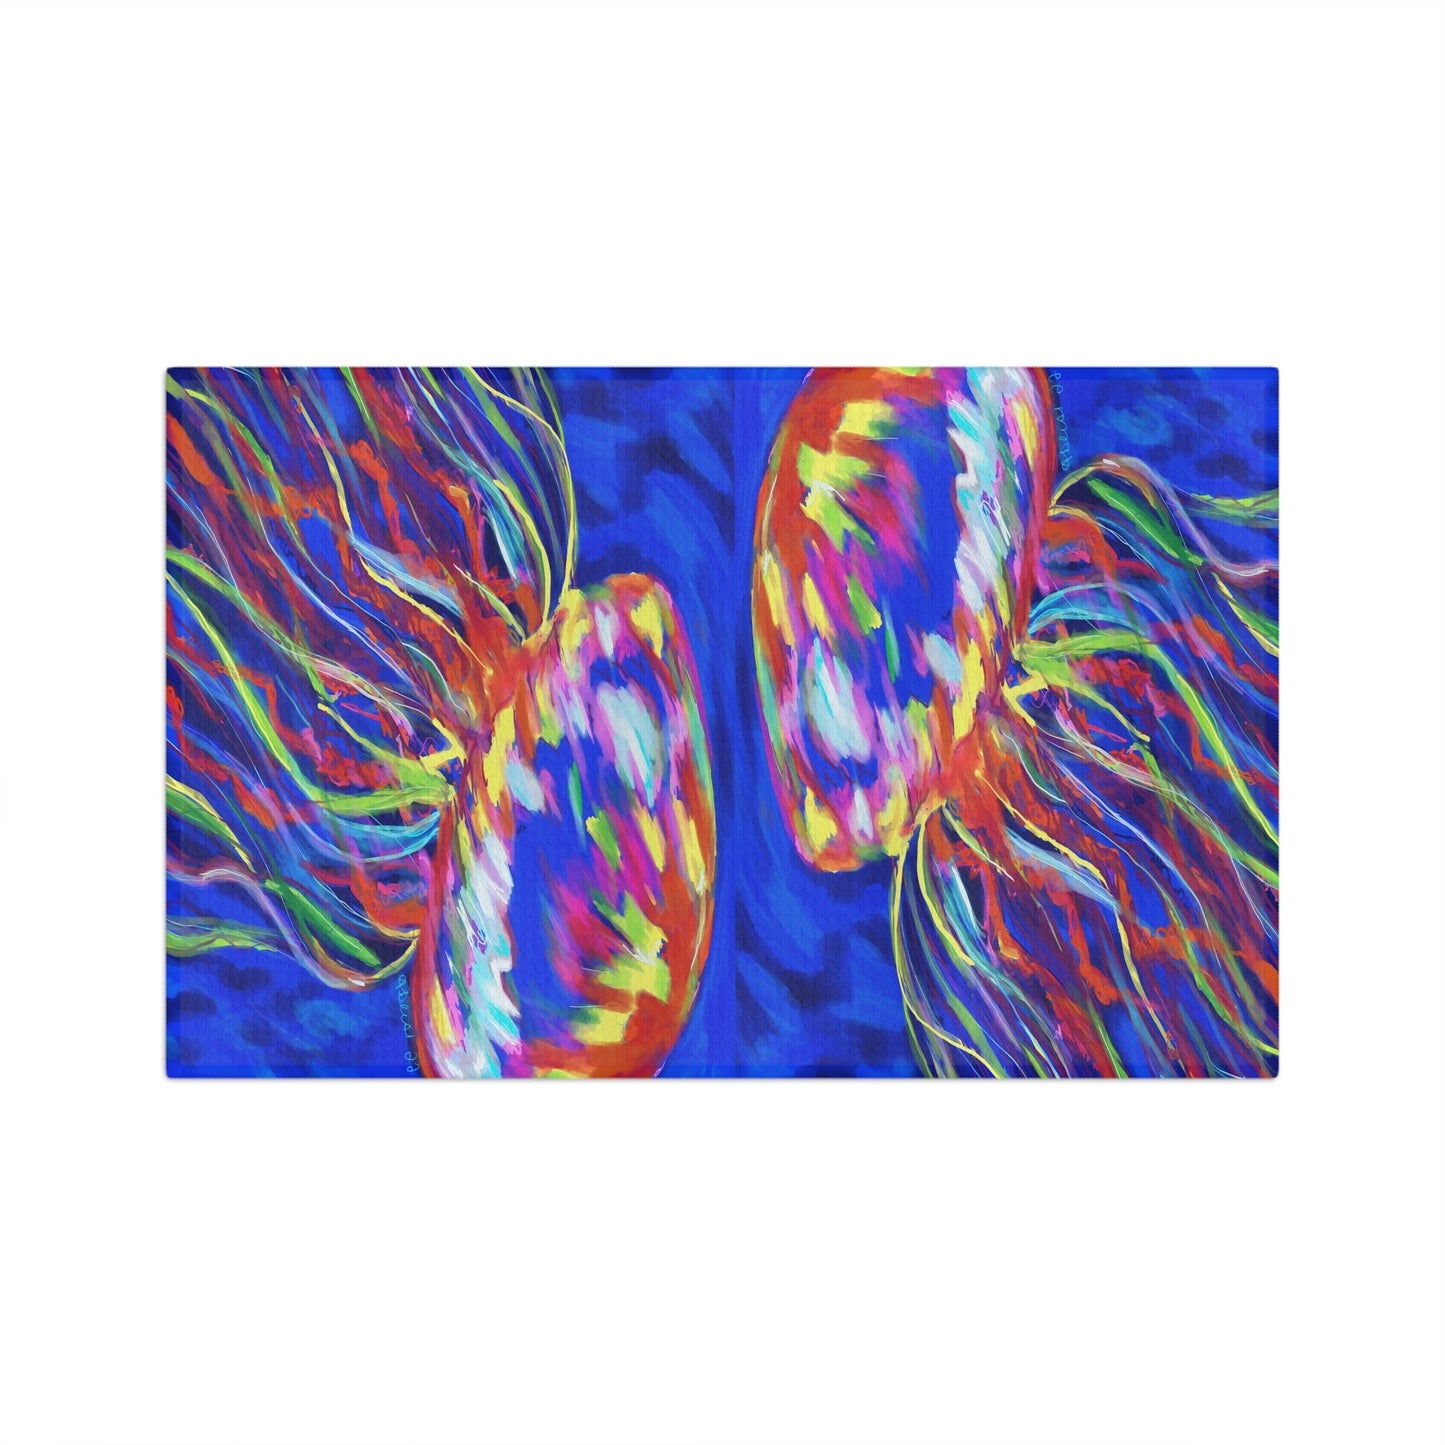 Jellyfish “Stringer” Microfiber Towel - Blue Cava